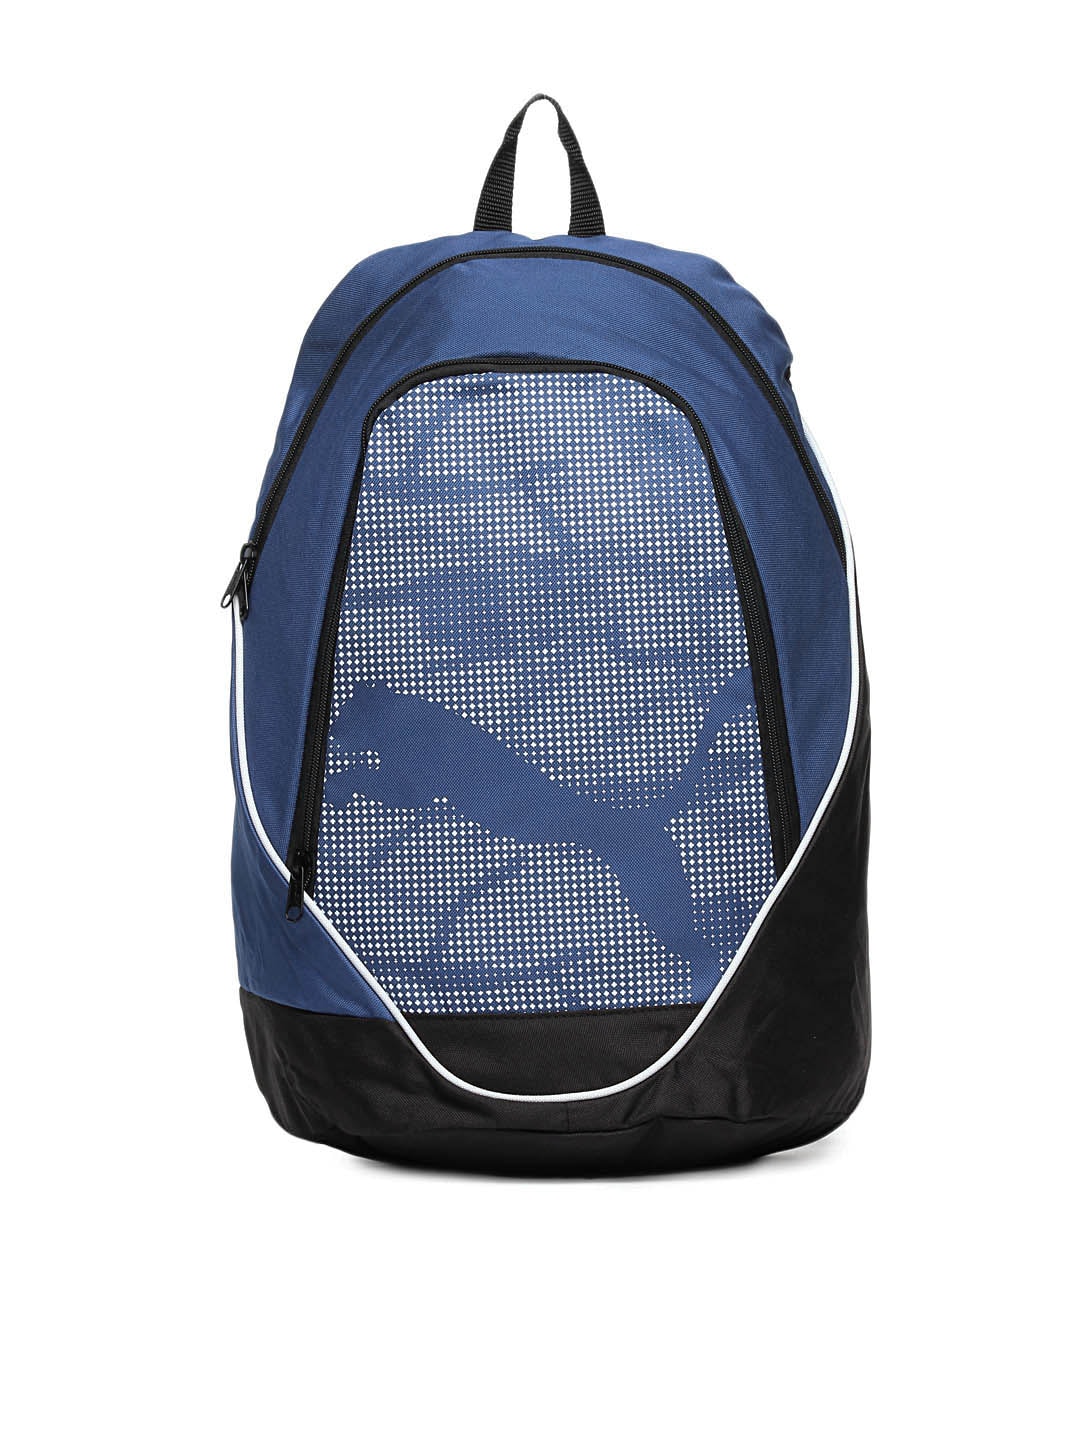 Puma Unisex Blue Backpack